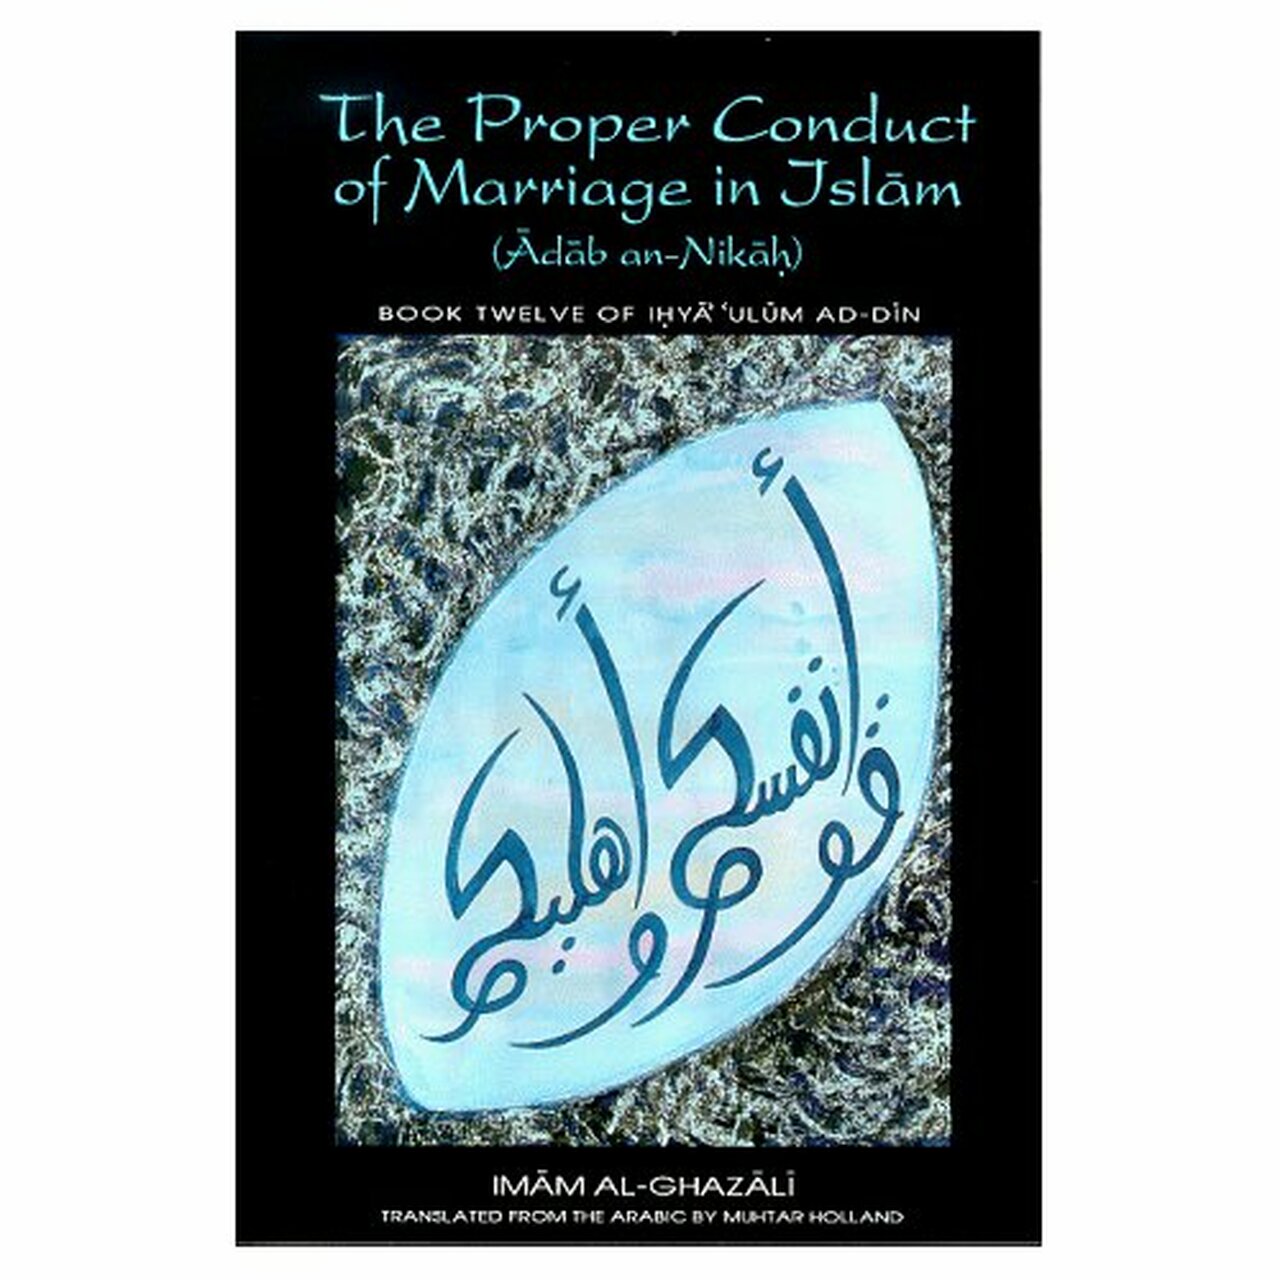 The Proper Conduct of Marriage in Islam [Adab An-Nikah] By Imam Al-Ghazali